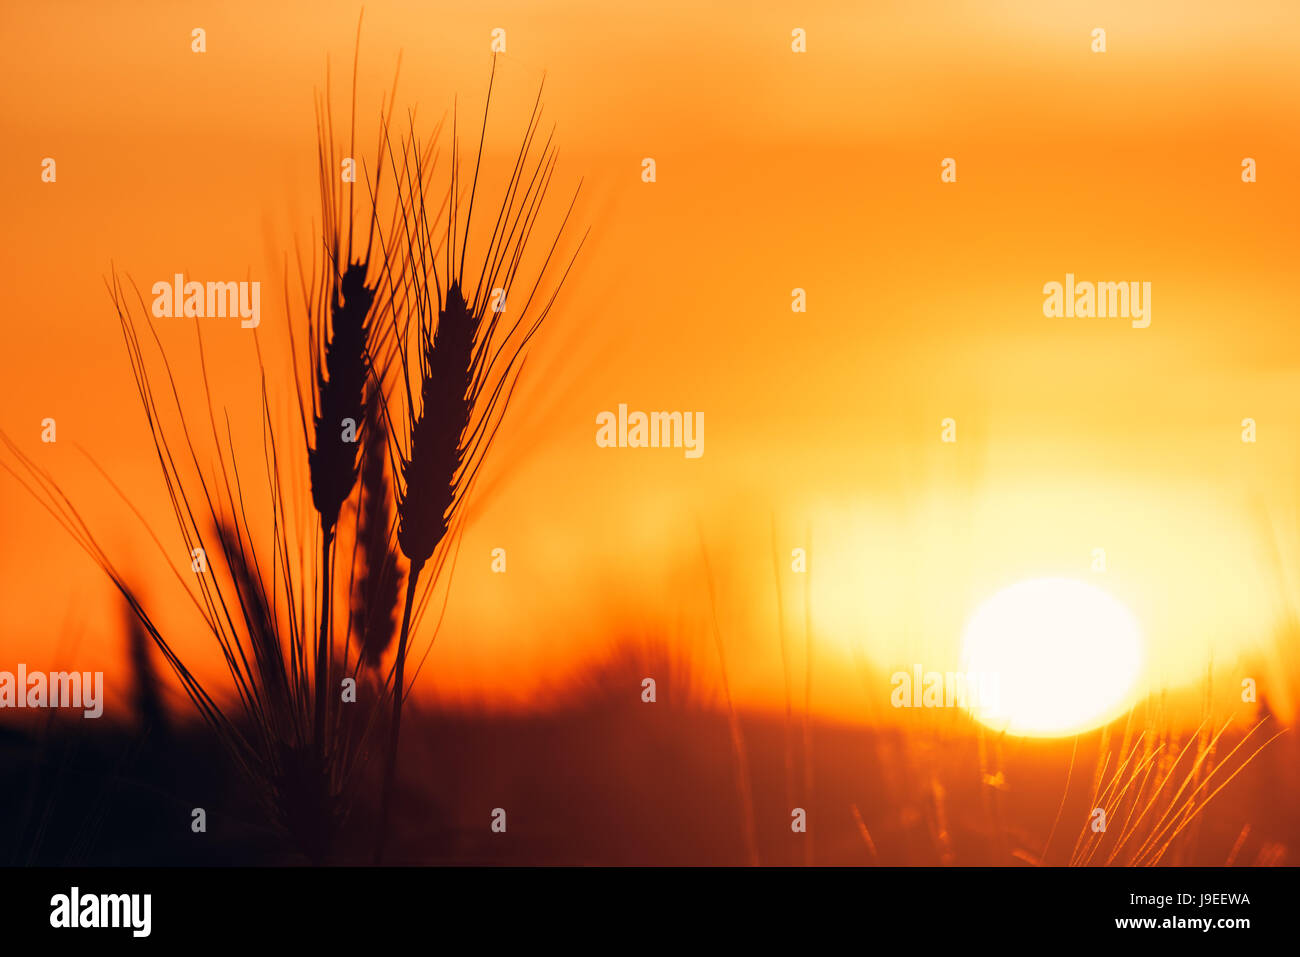 Gerste-Ohren im Sonnenuntergang, kultivierte Getreide Feld gegen warme orange Einstellung Sonnenhimmel Stockfoto